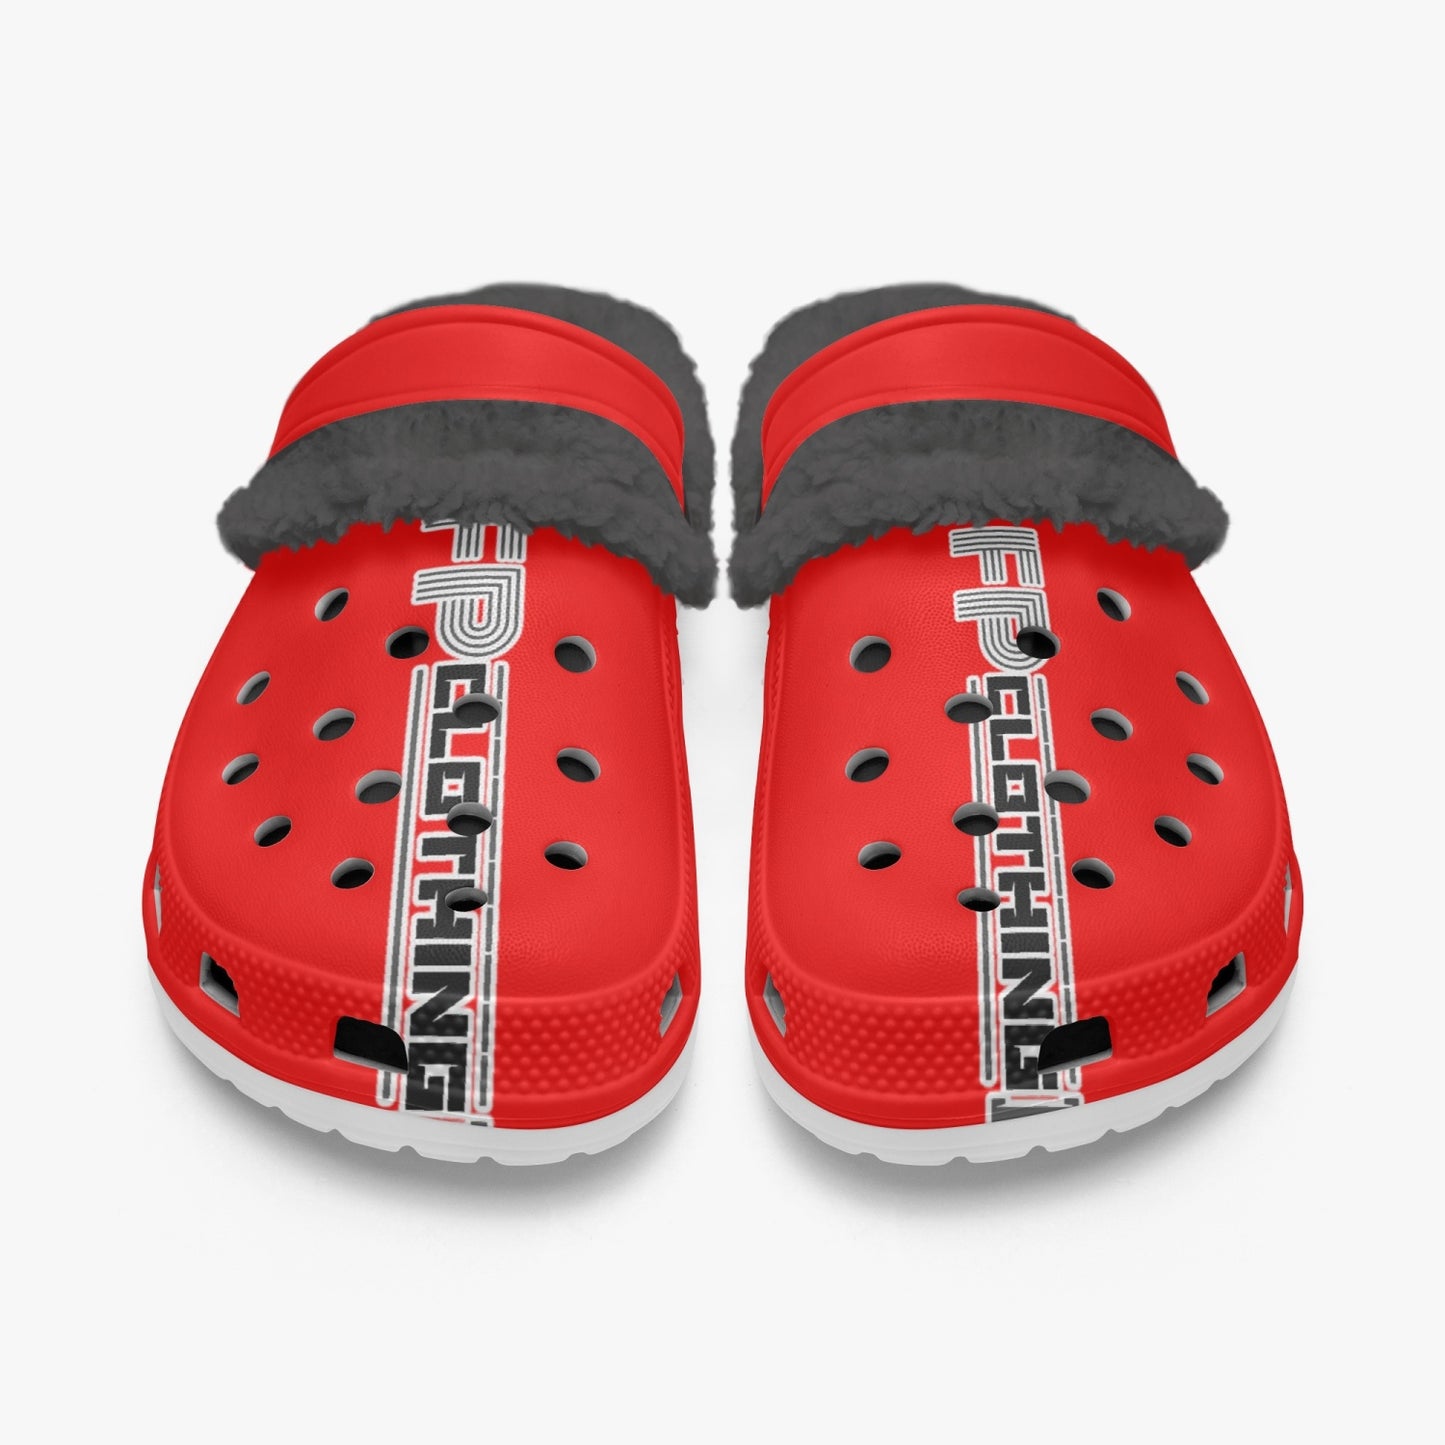 FP Crocs